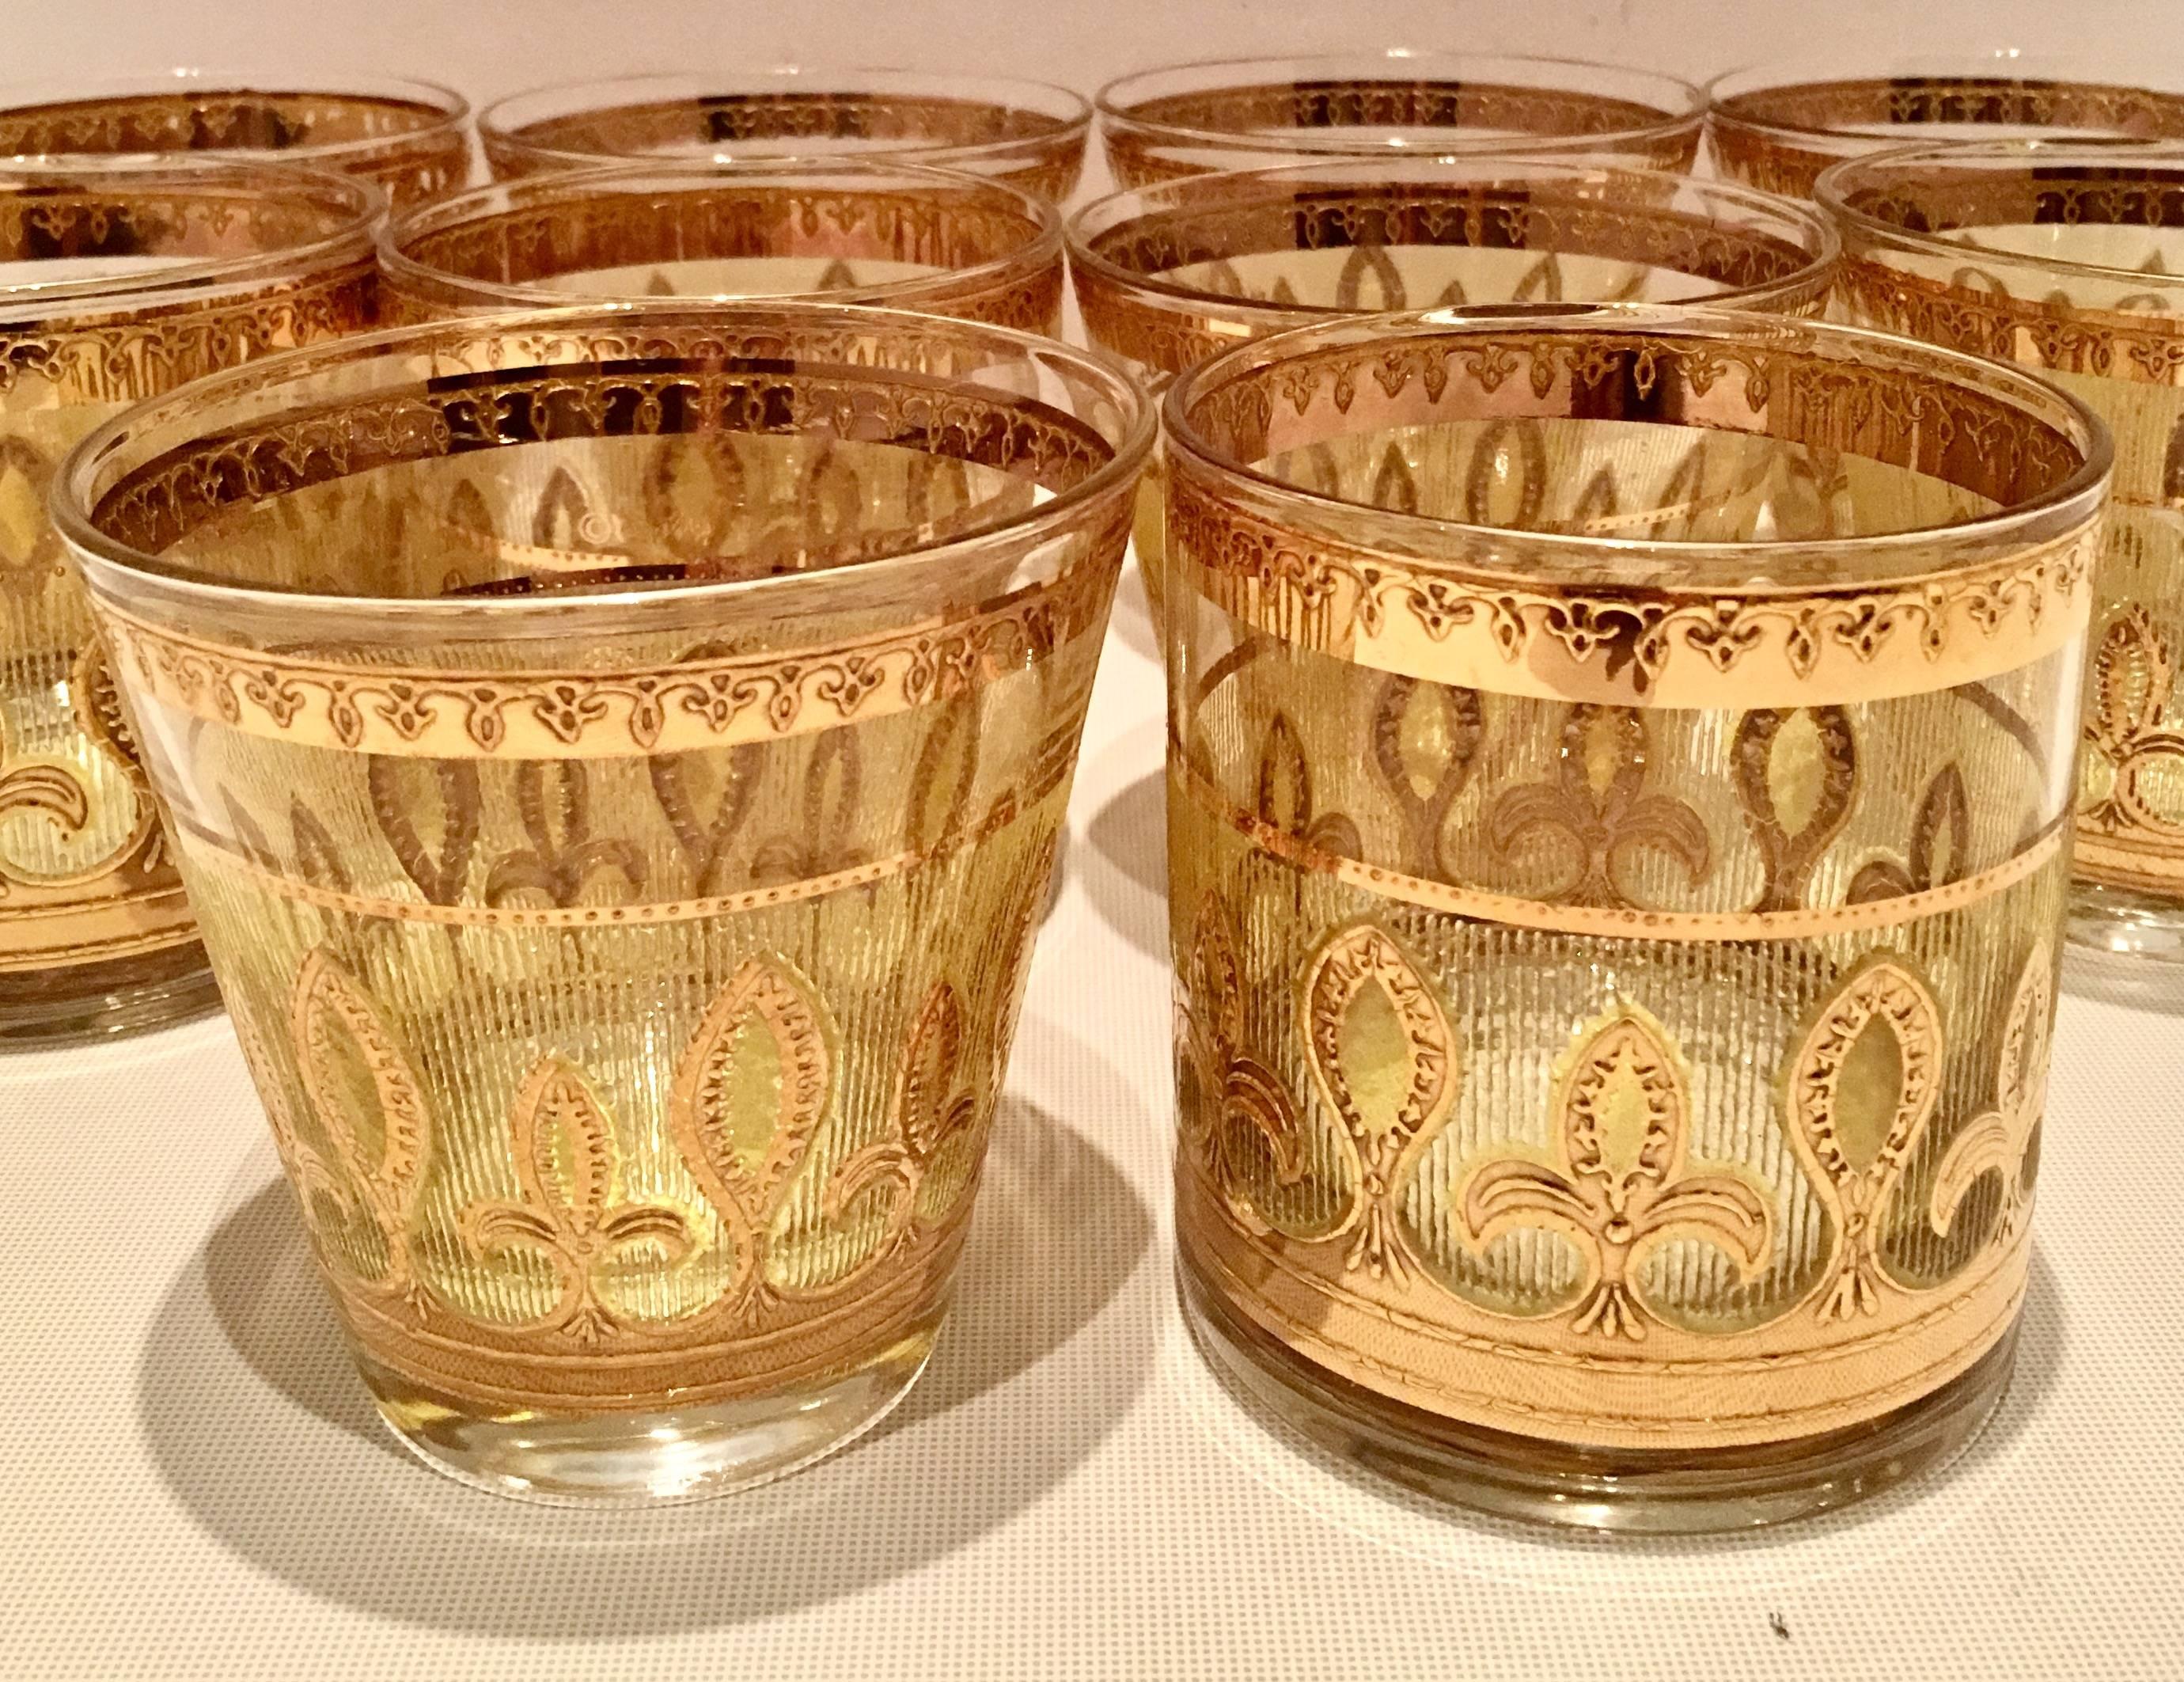 Culver Ltd. set of ten green and 22-karat gold embellished fleur-de-lis motif drink glasses. Set includes six double old fashion glasses and four rocks glasses, 3.5